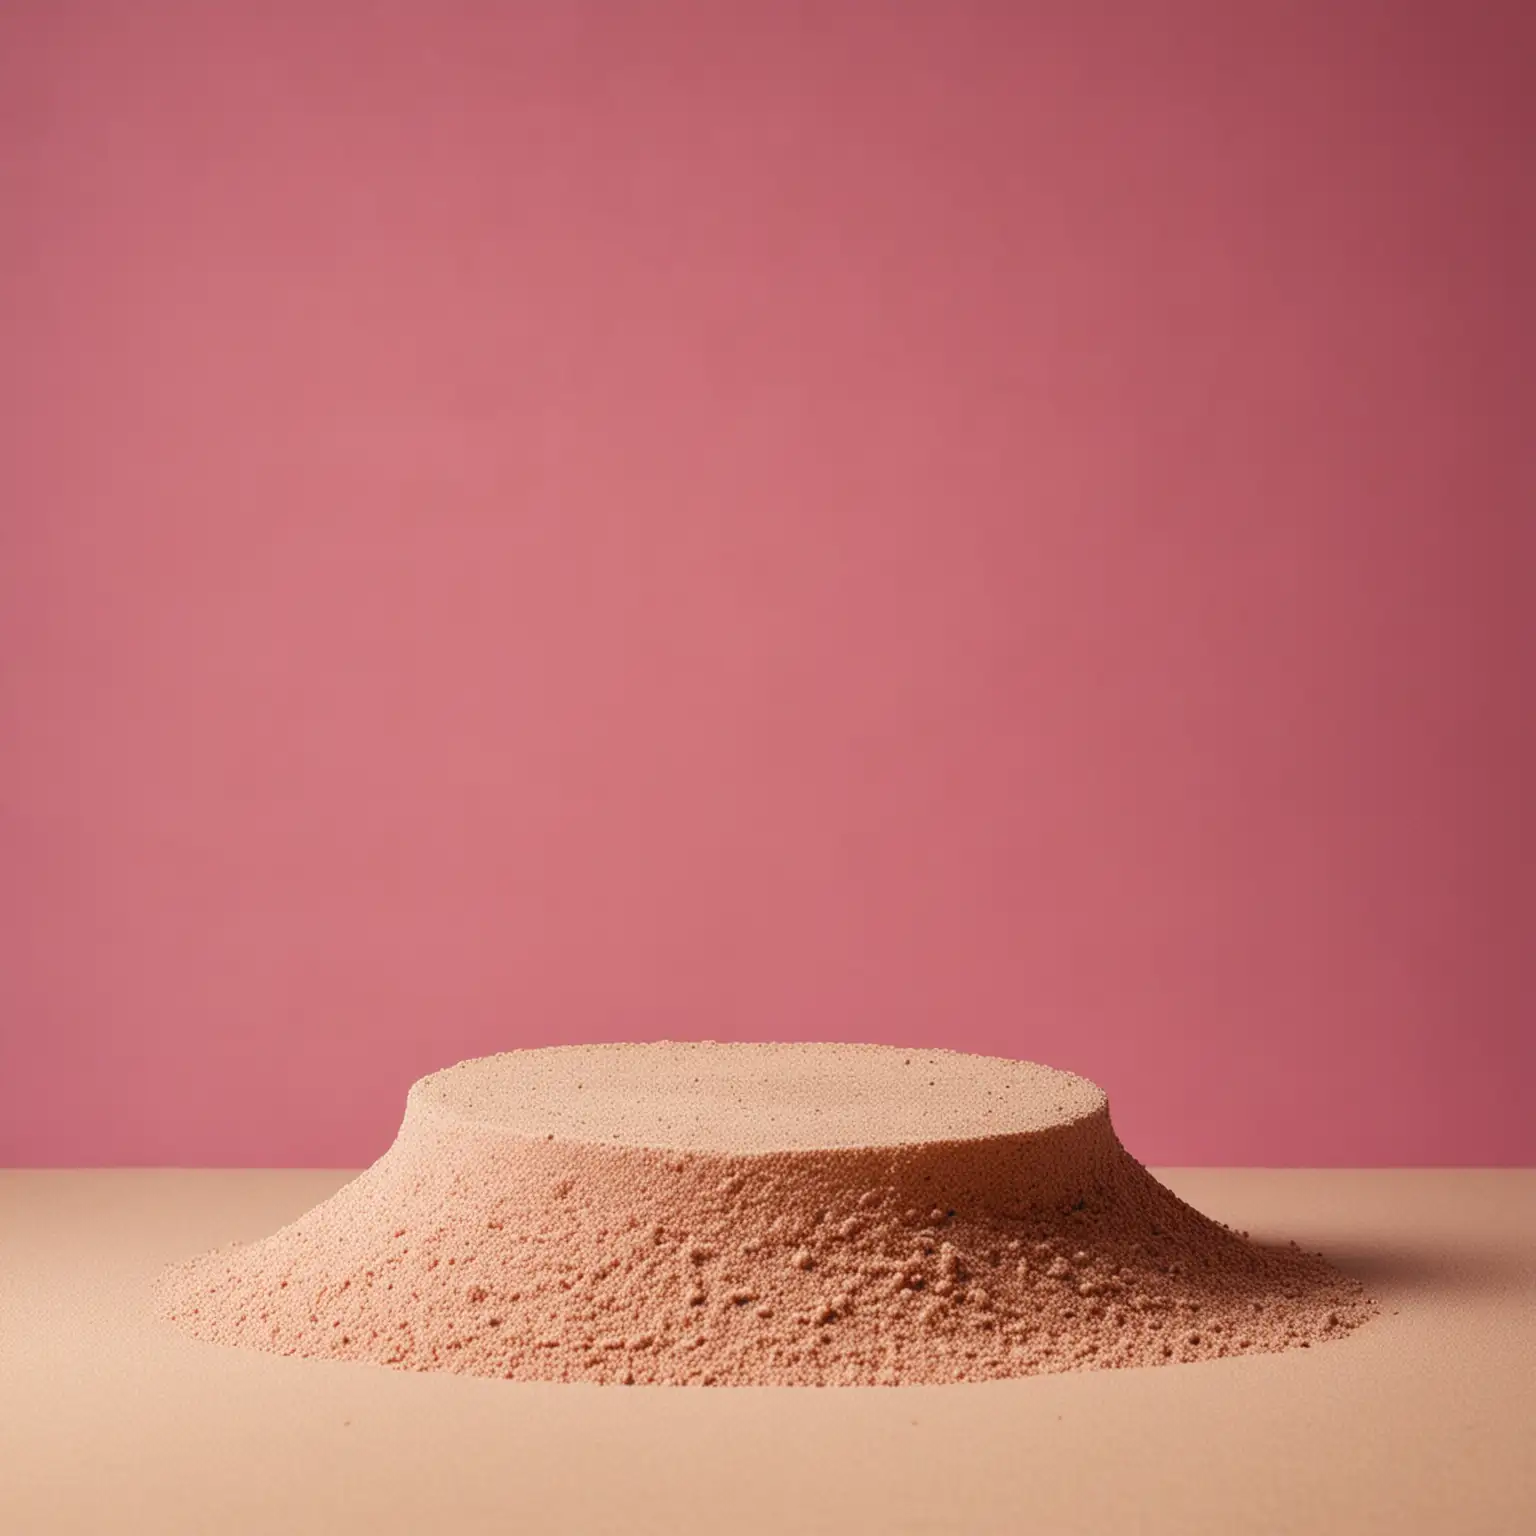 Pink Sand Podium on Vibrant Background